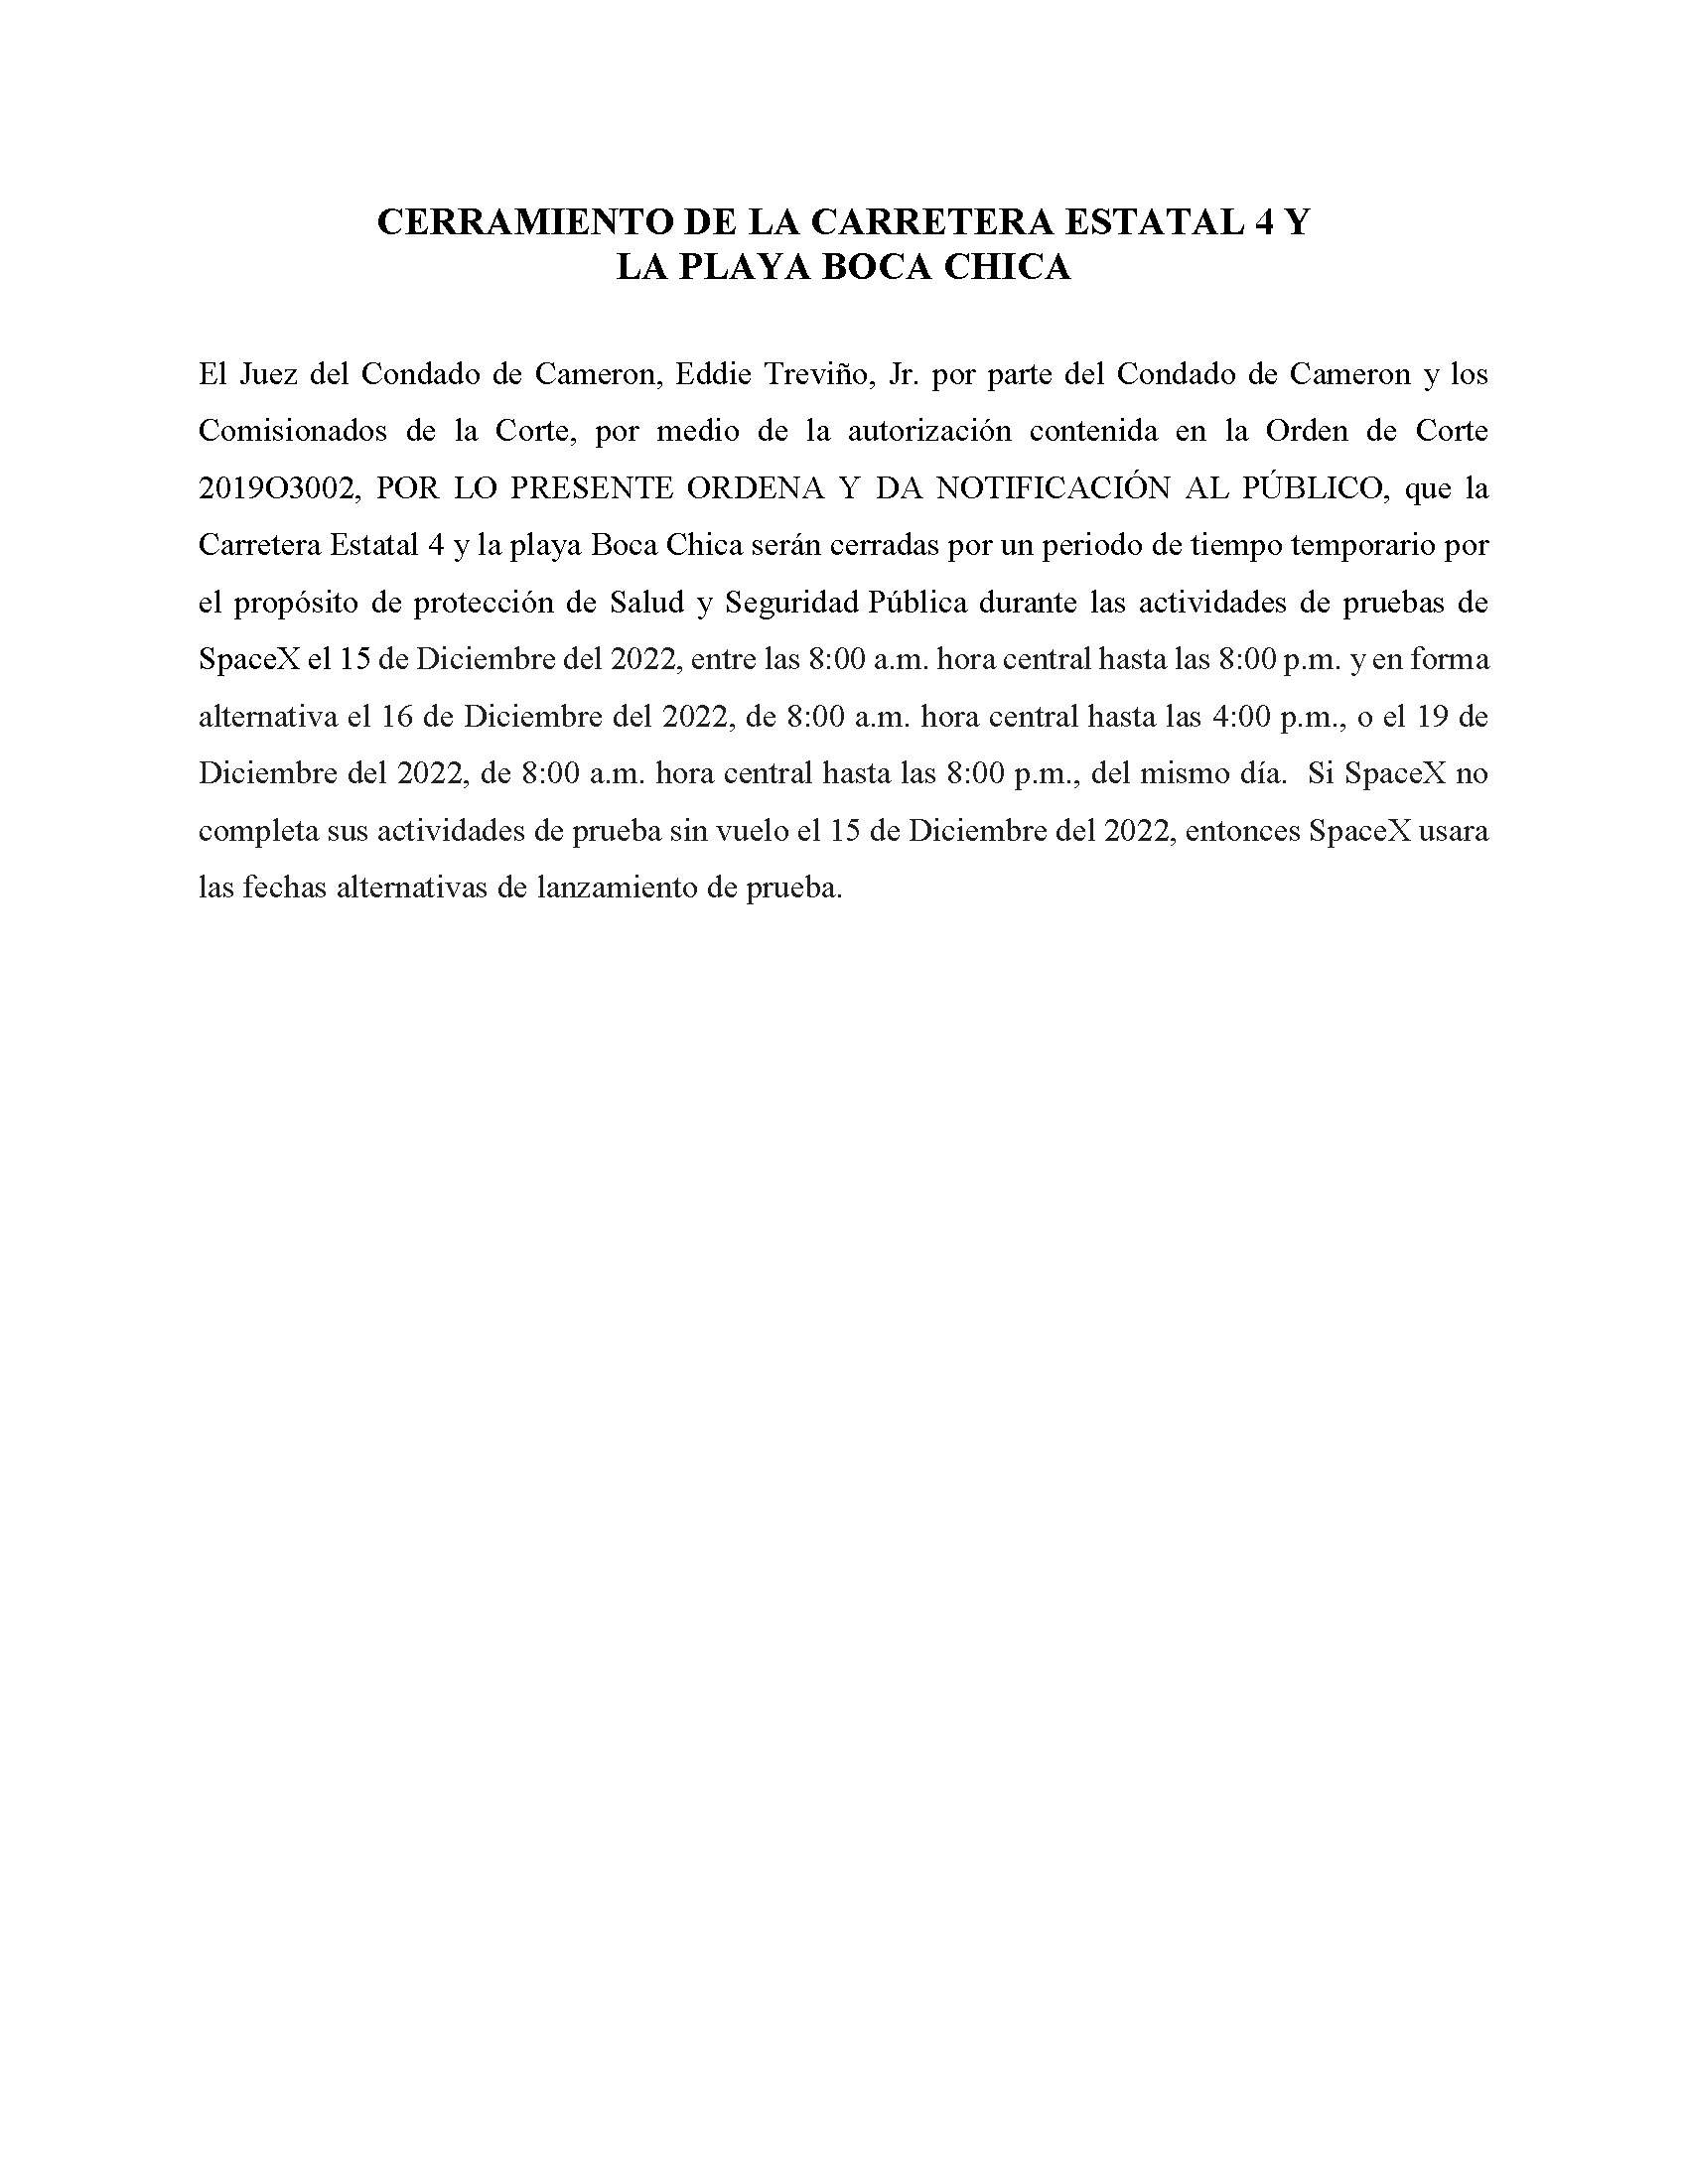 ORDER.CLOSURE OF HIGHWAY 4 Y LA PLAYA BOCA CHICA.SPANISH.12.15.2022